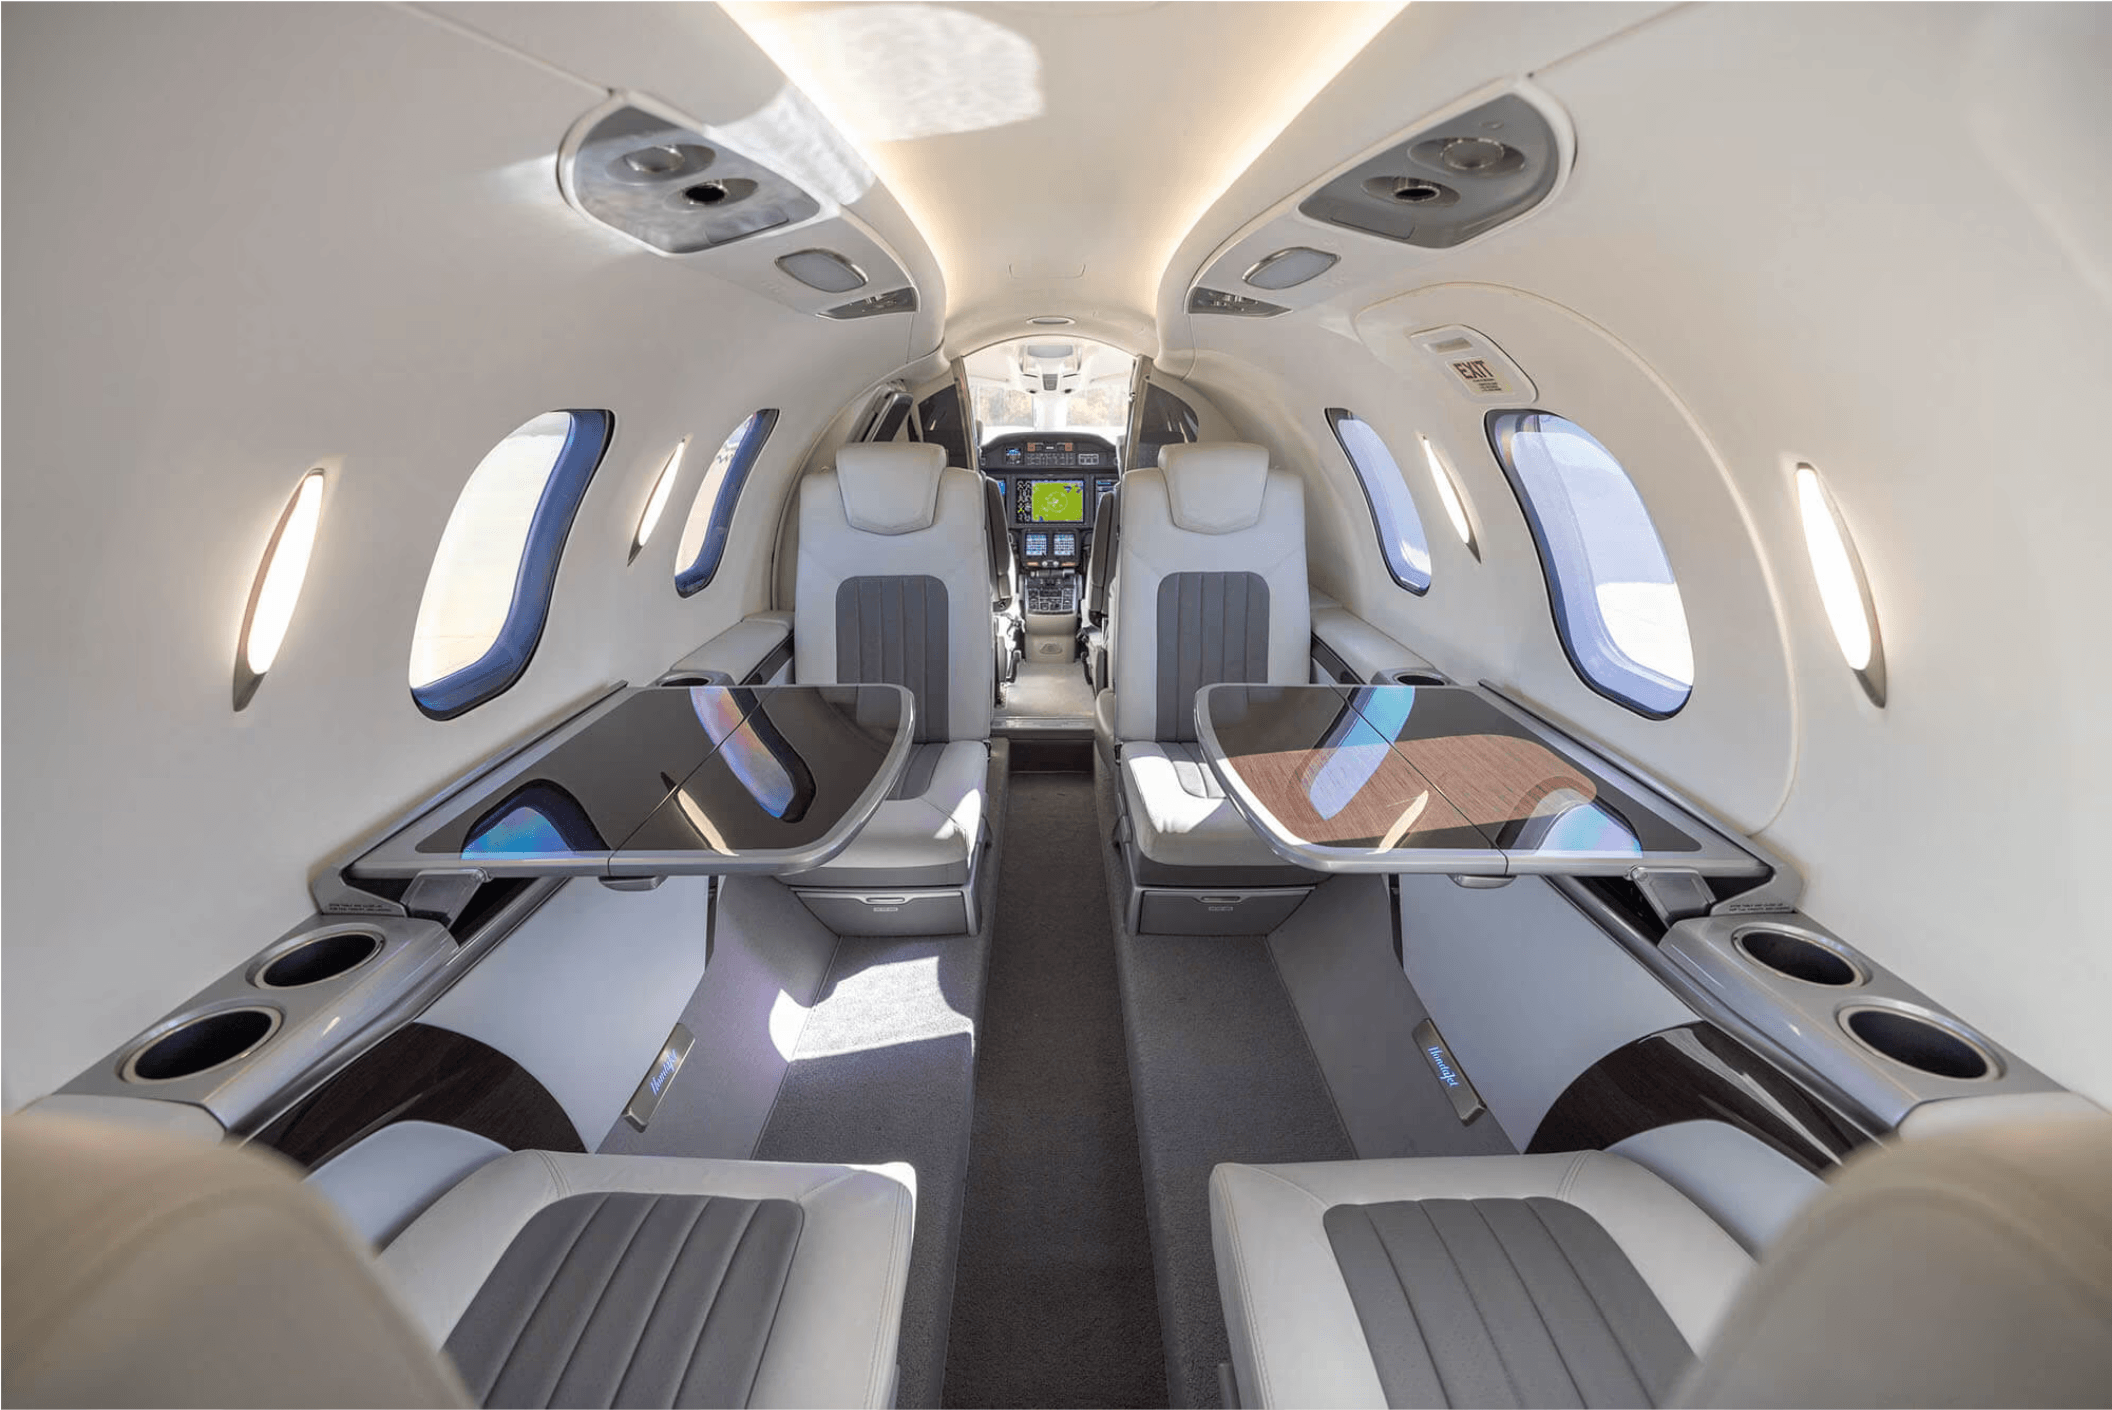 Luxurious jet interior